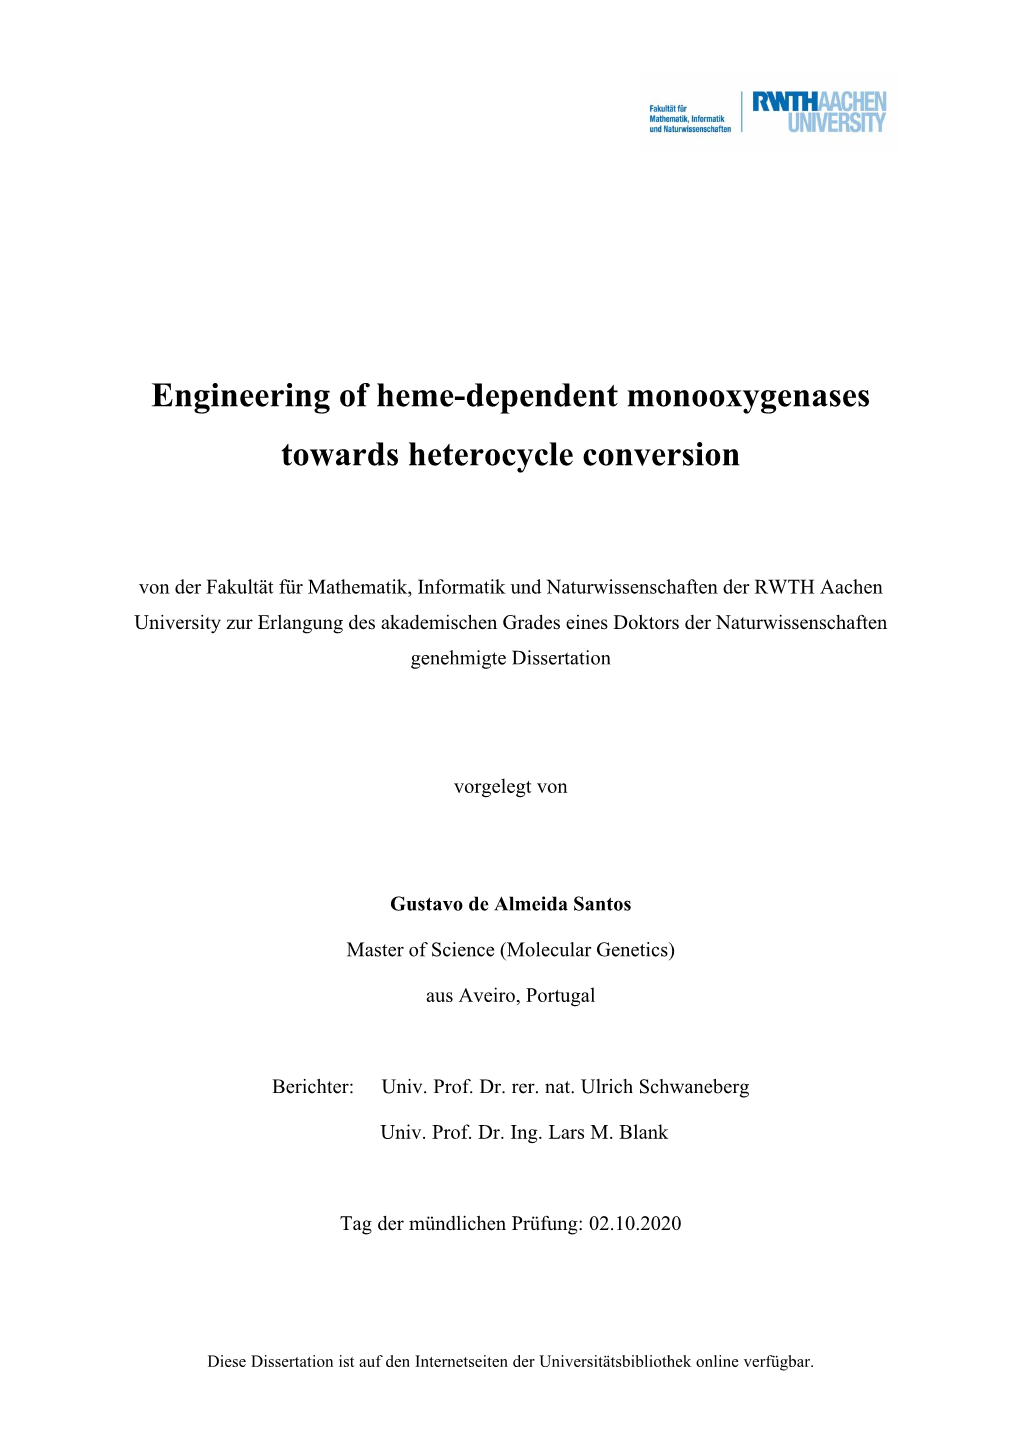 Engineering of Heme-Dependent Monooxygenases Towards Heterocycle Conversion